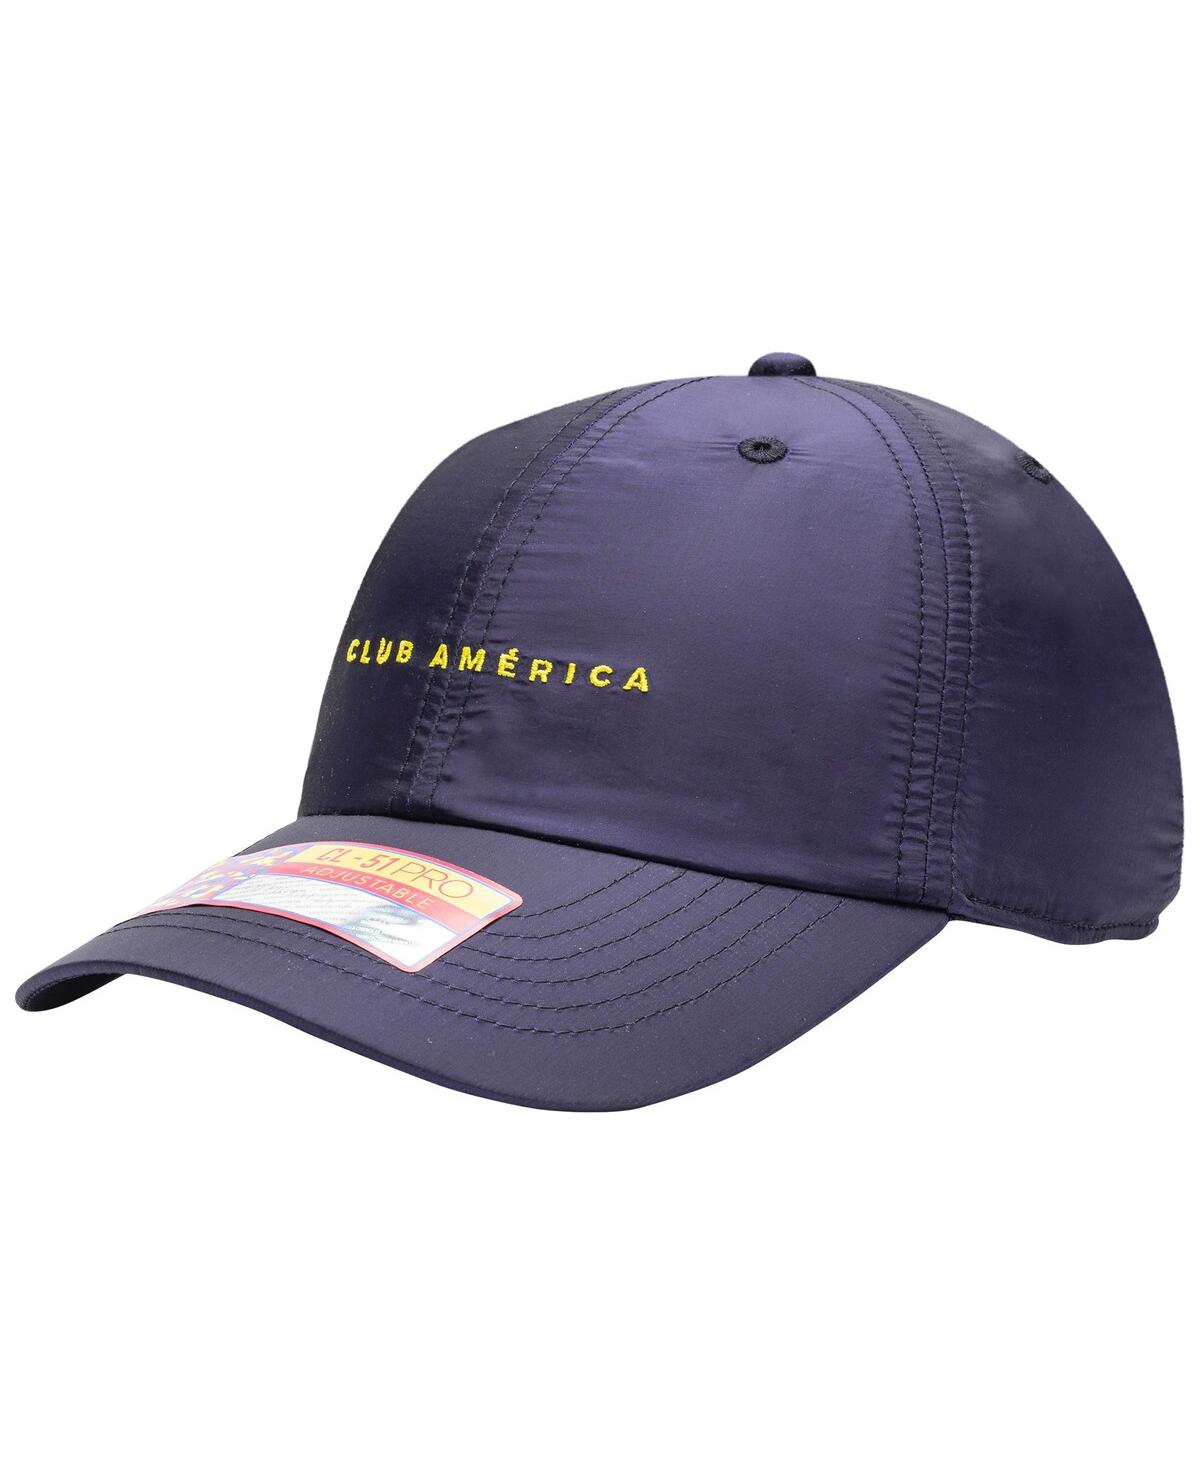 Men's Navy Club America Liquid Adjustable Hat - Navy